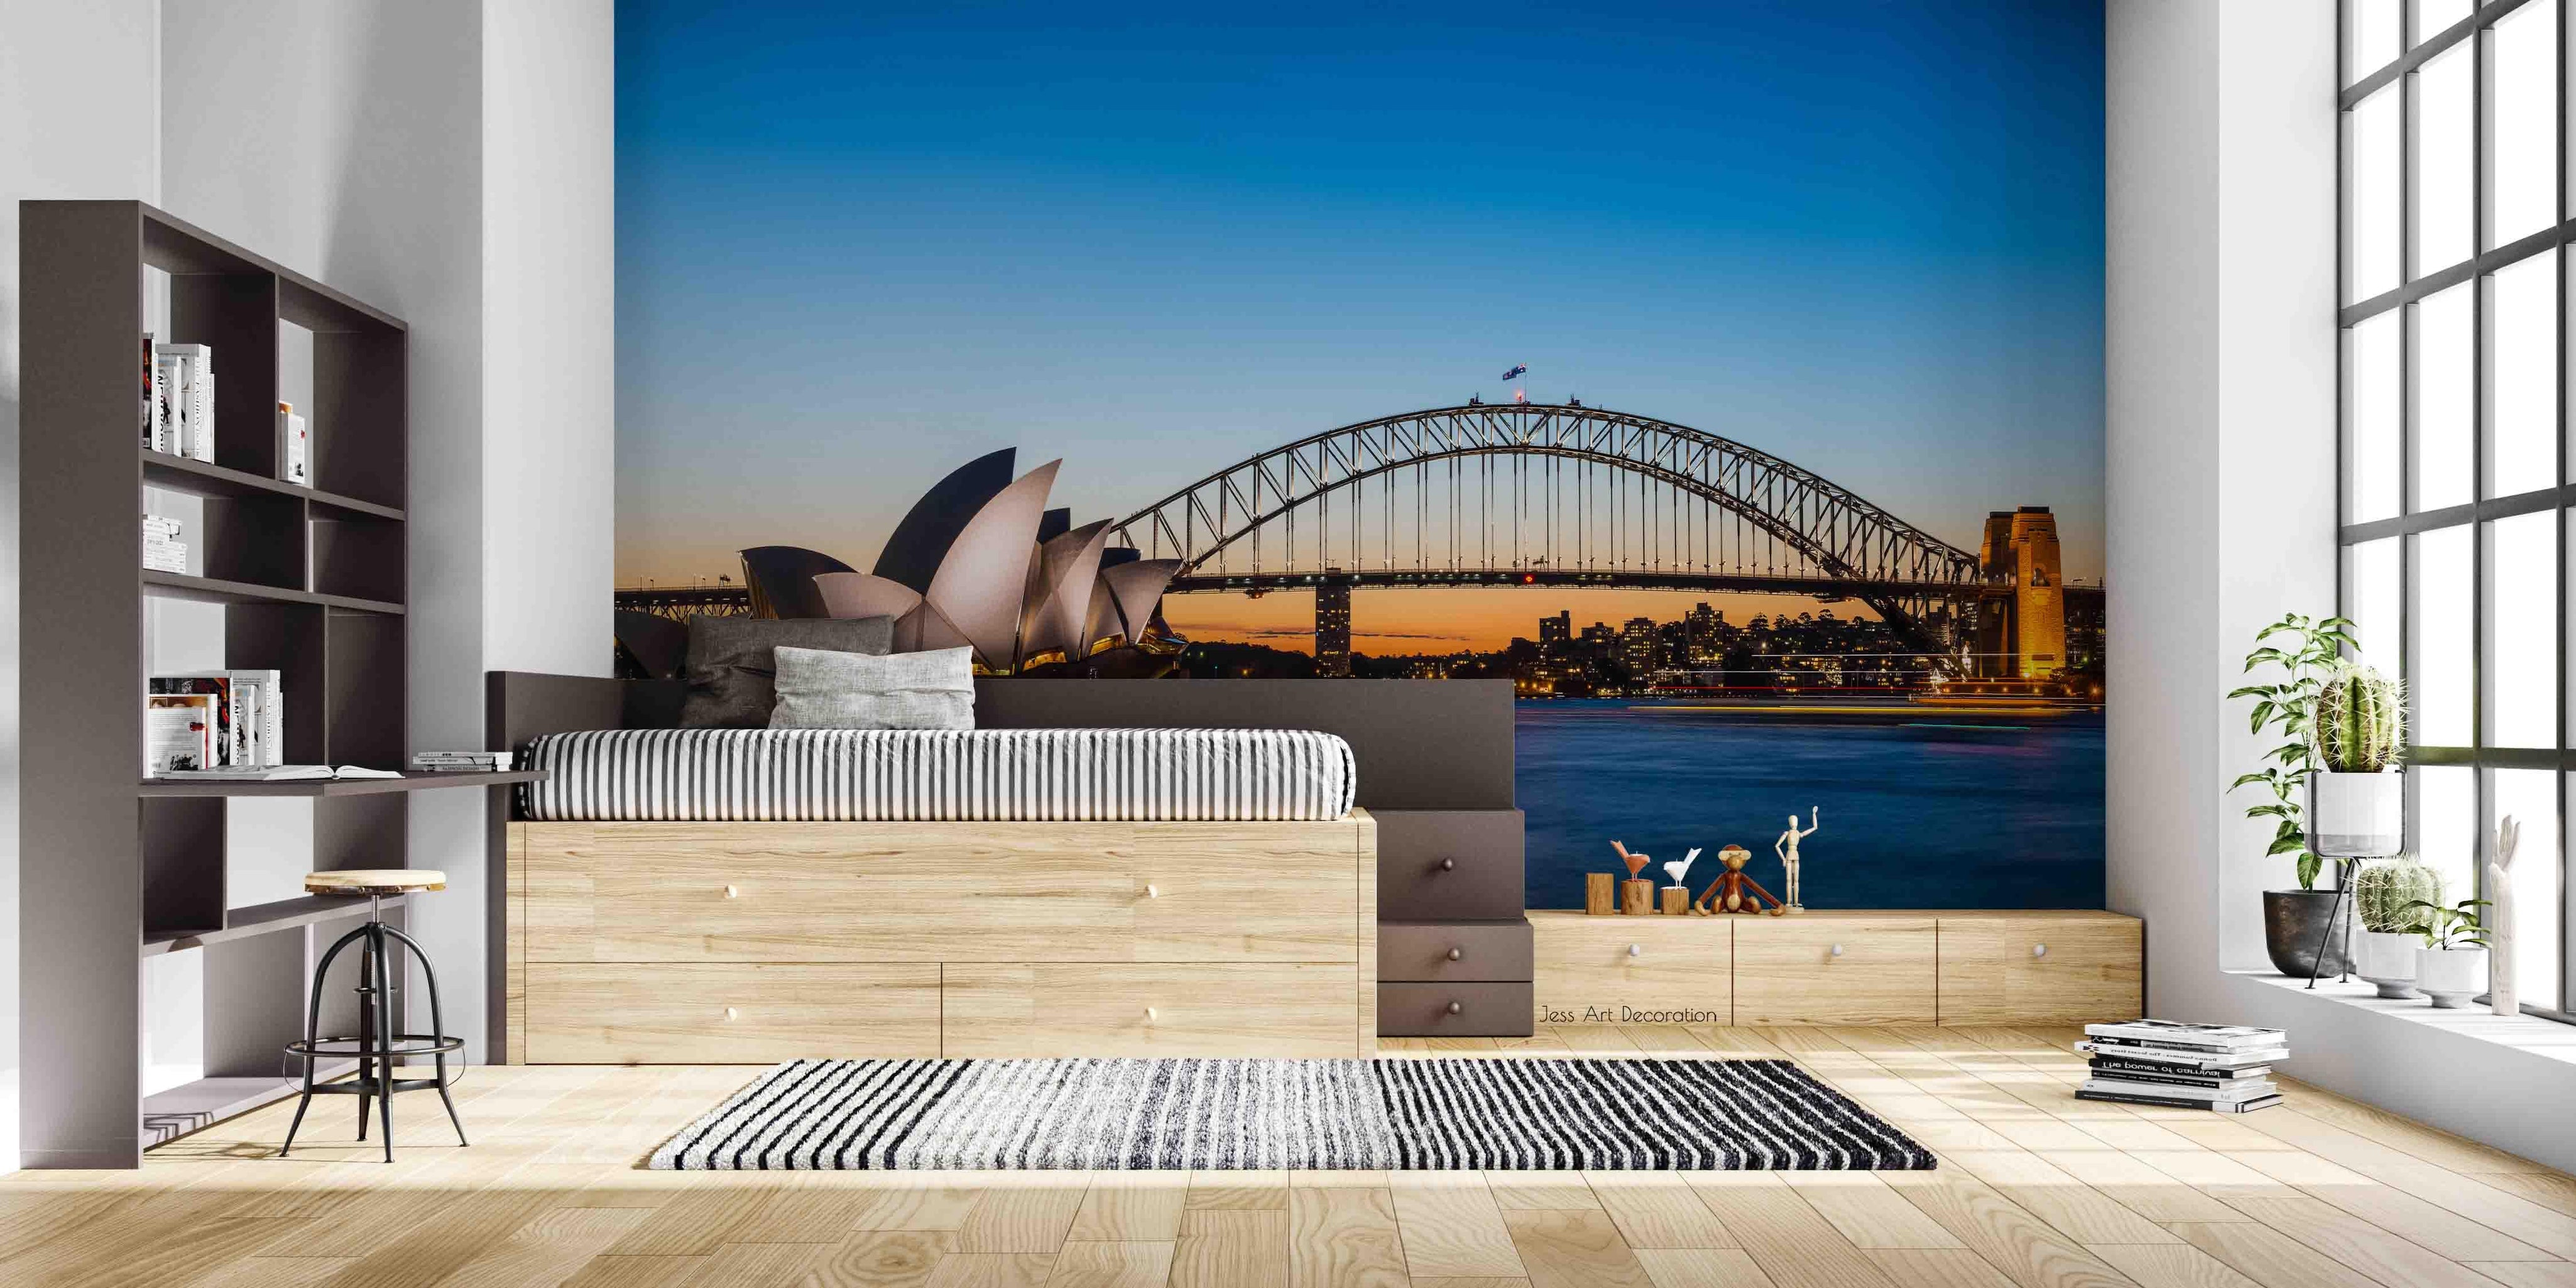 3D Sydney Opera House Wall Mural Wallpaper sww 97- Jess Art Decoration